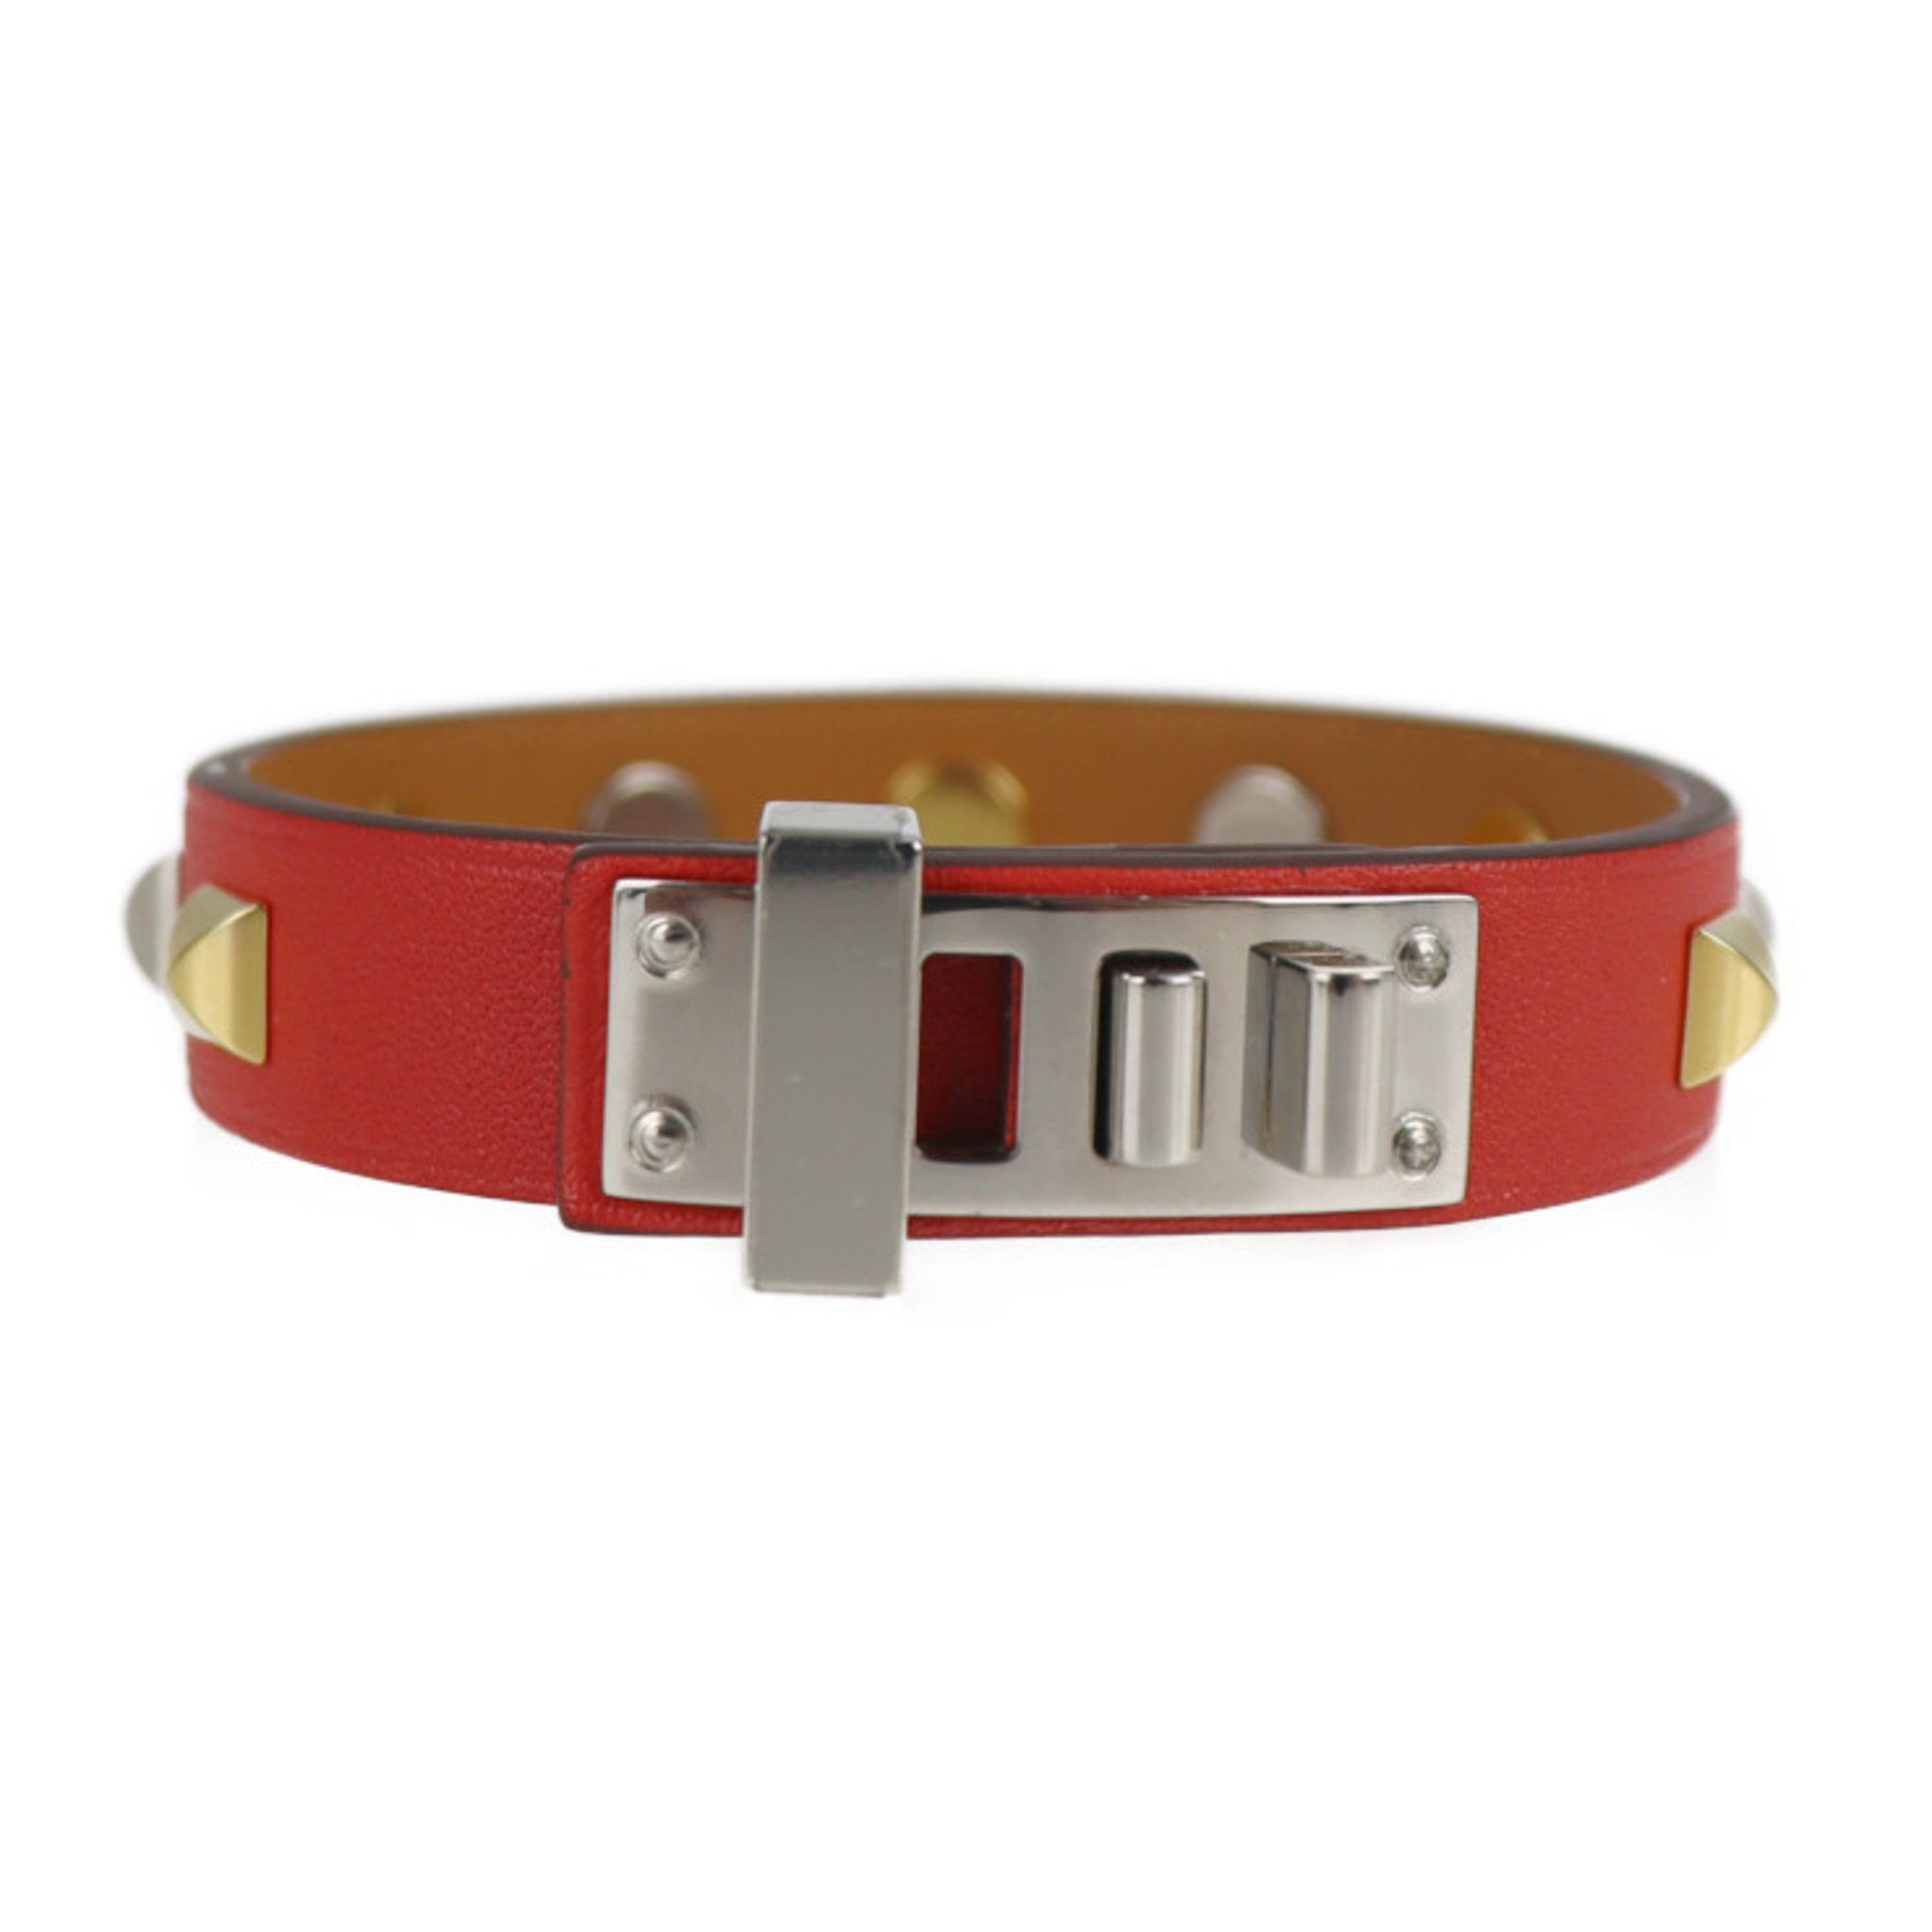 HERMES Hermes mini dog square crew bracelet 071680CK notation size T3 leather rouge tomato